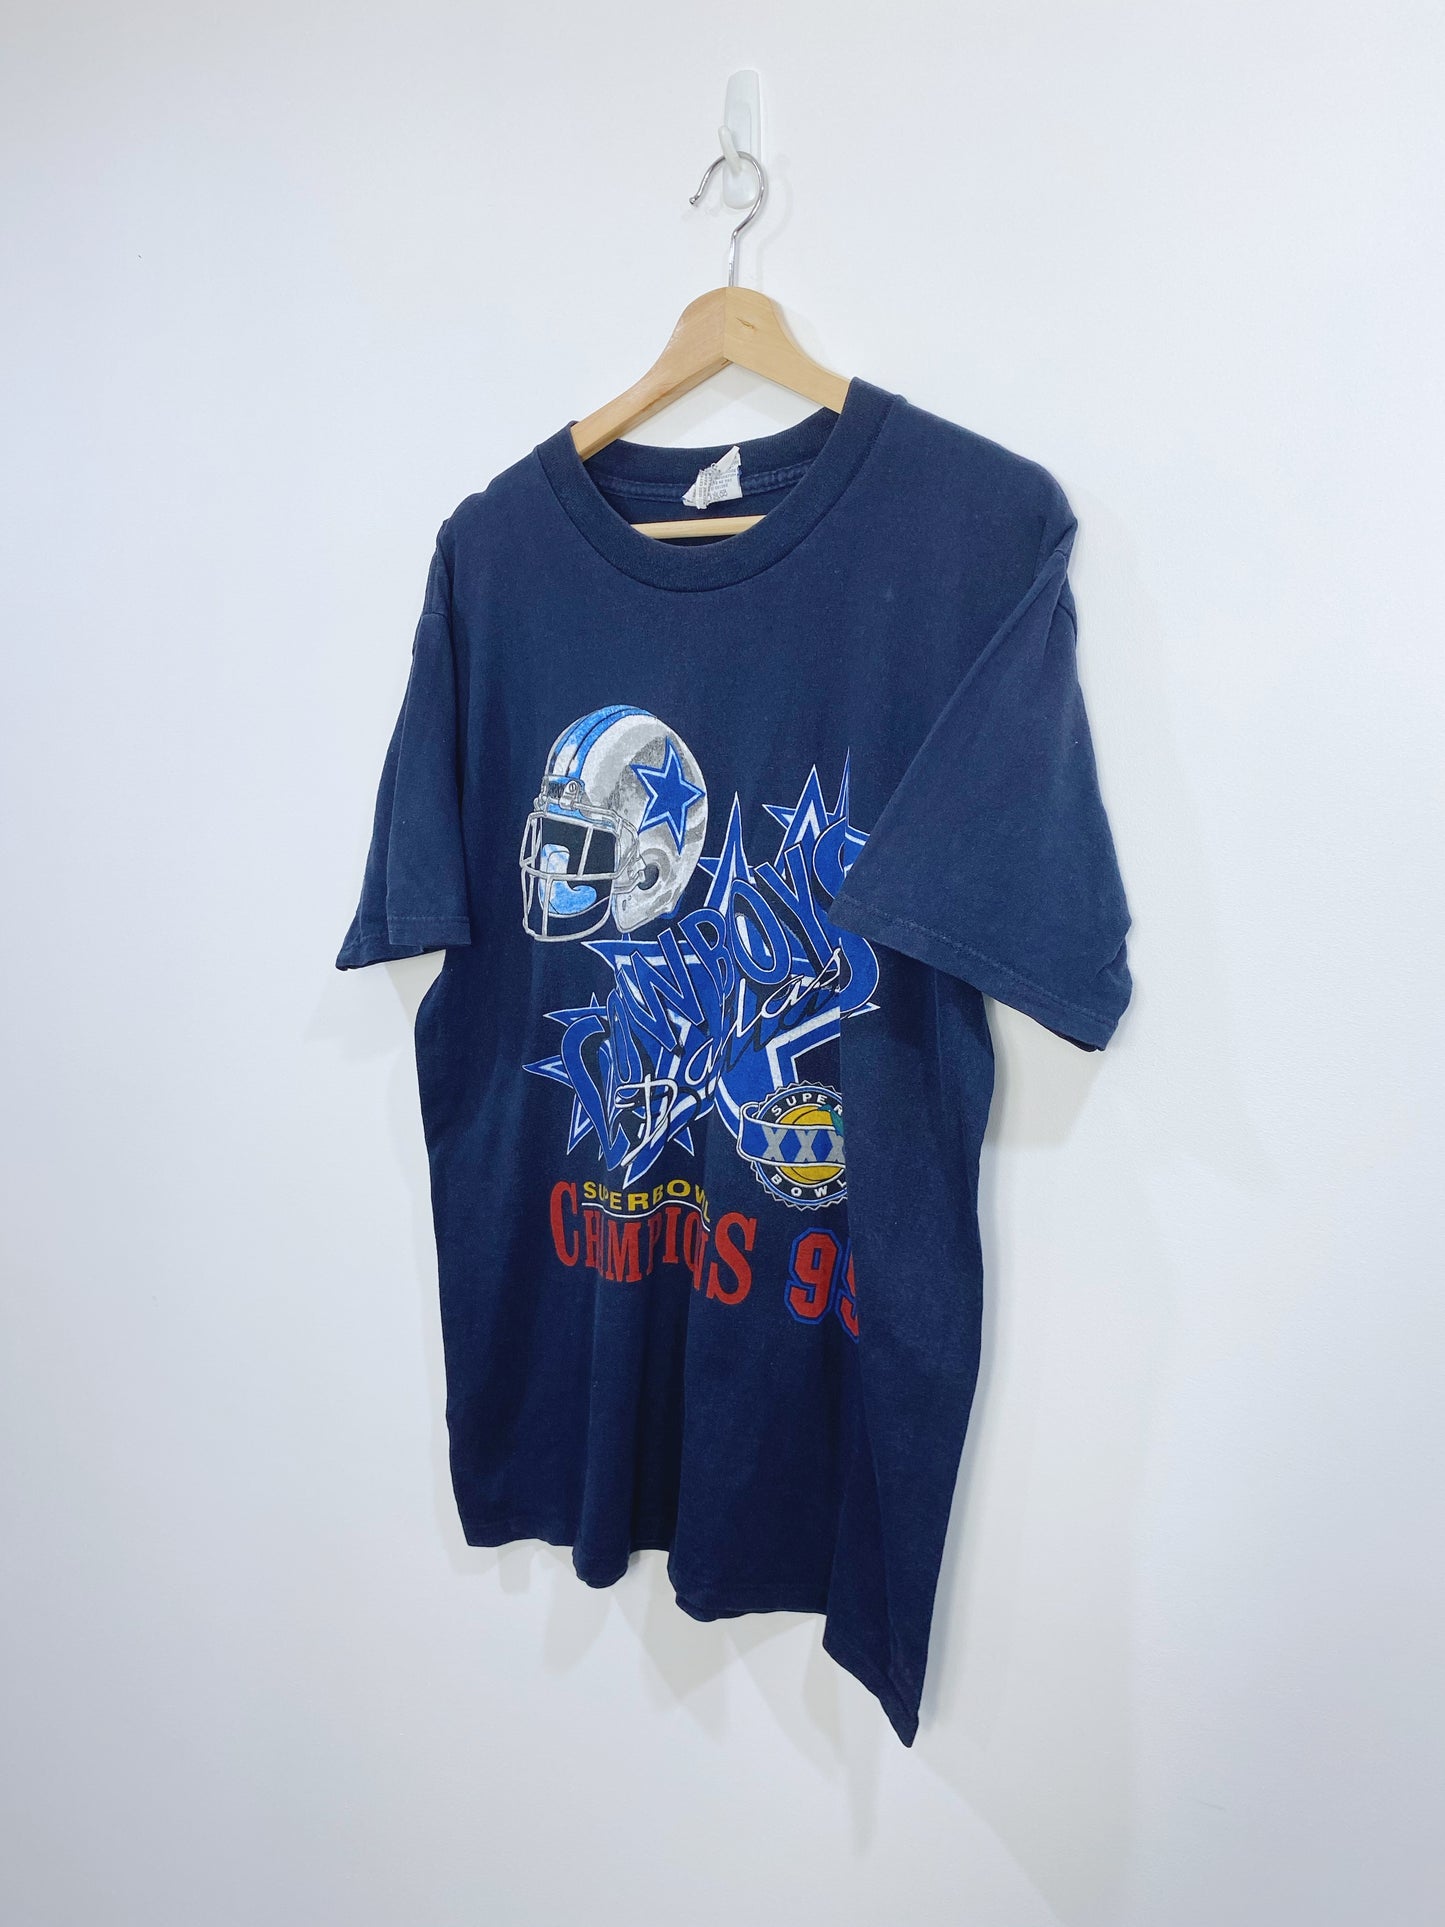 Vintage 1995 Dallas Cowboys Championship T-shirt L